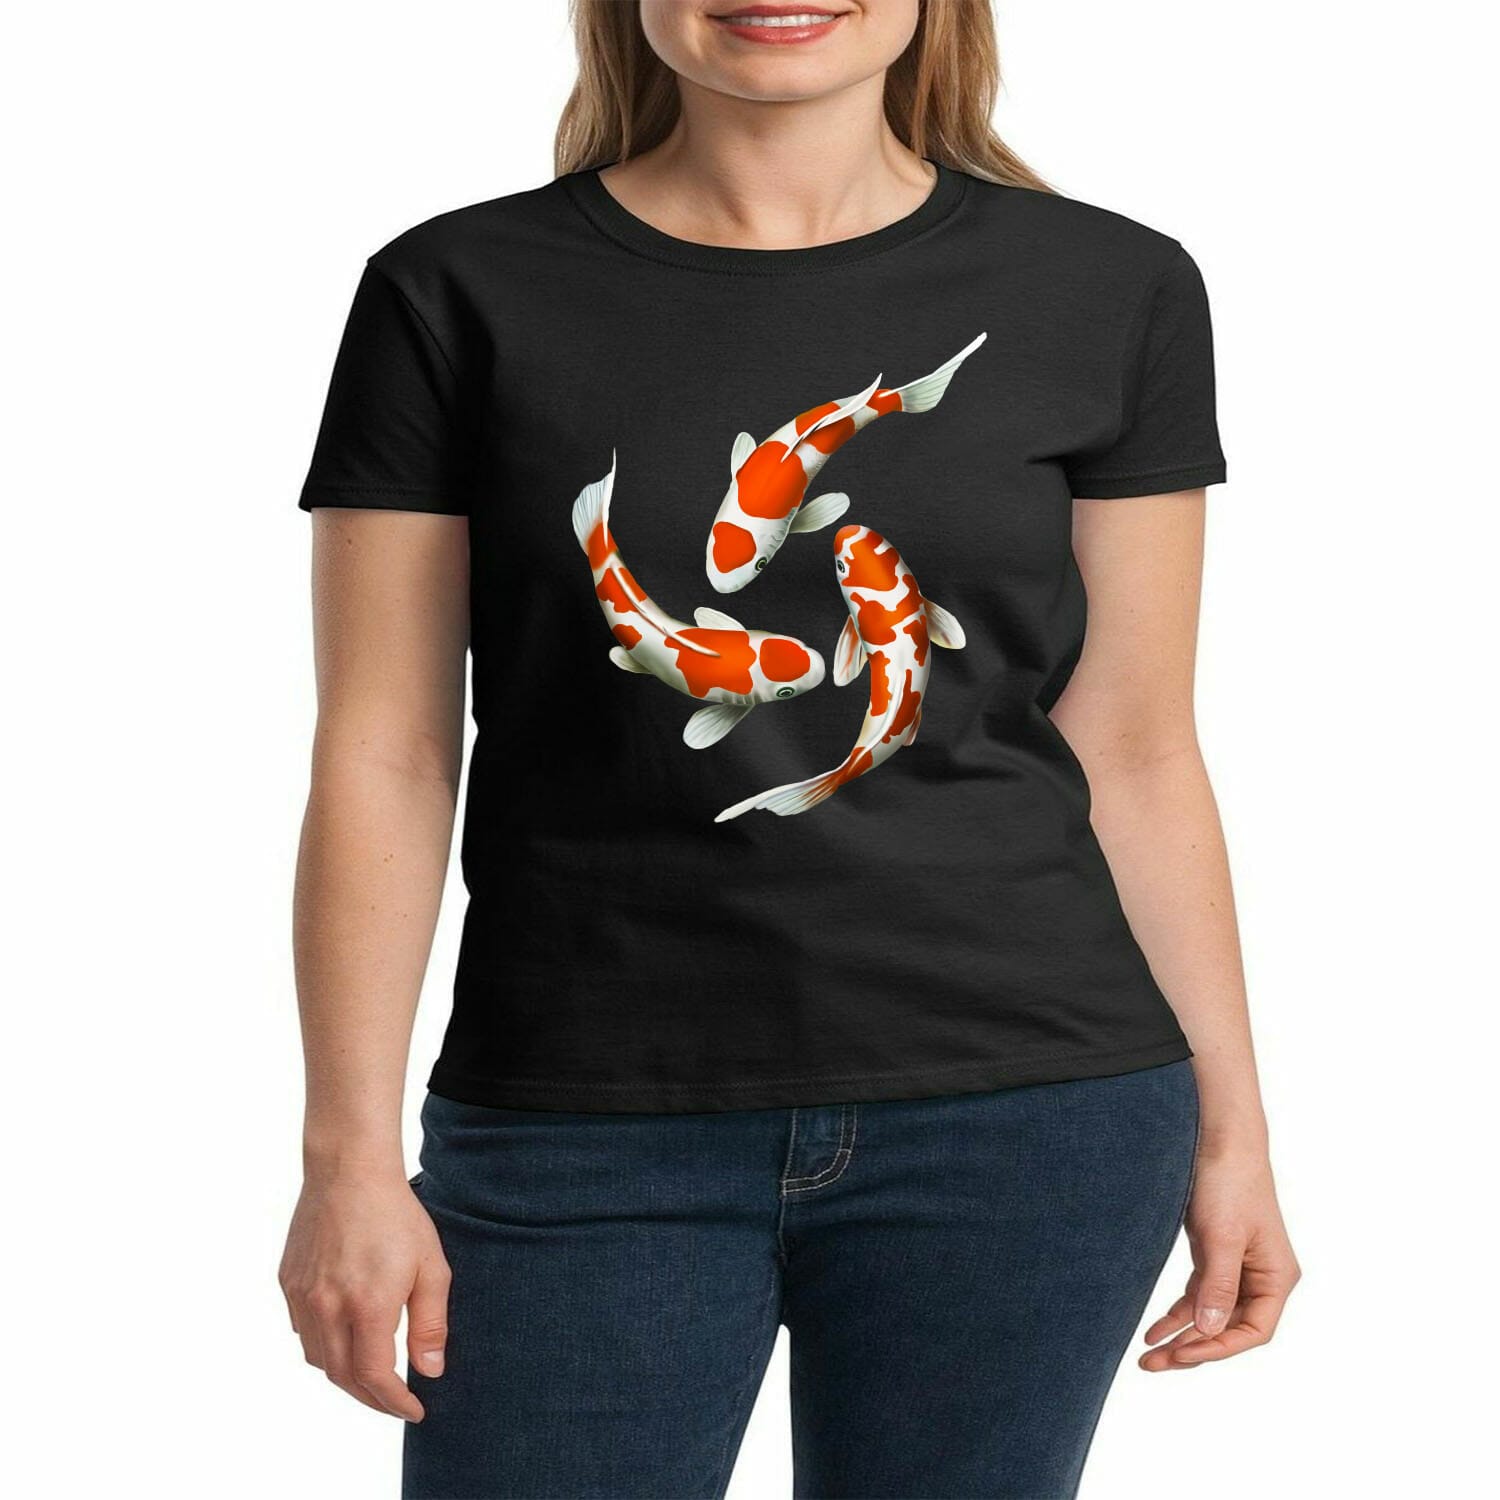 3 Fish T-shirt Design For Women